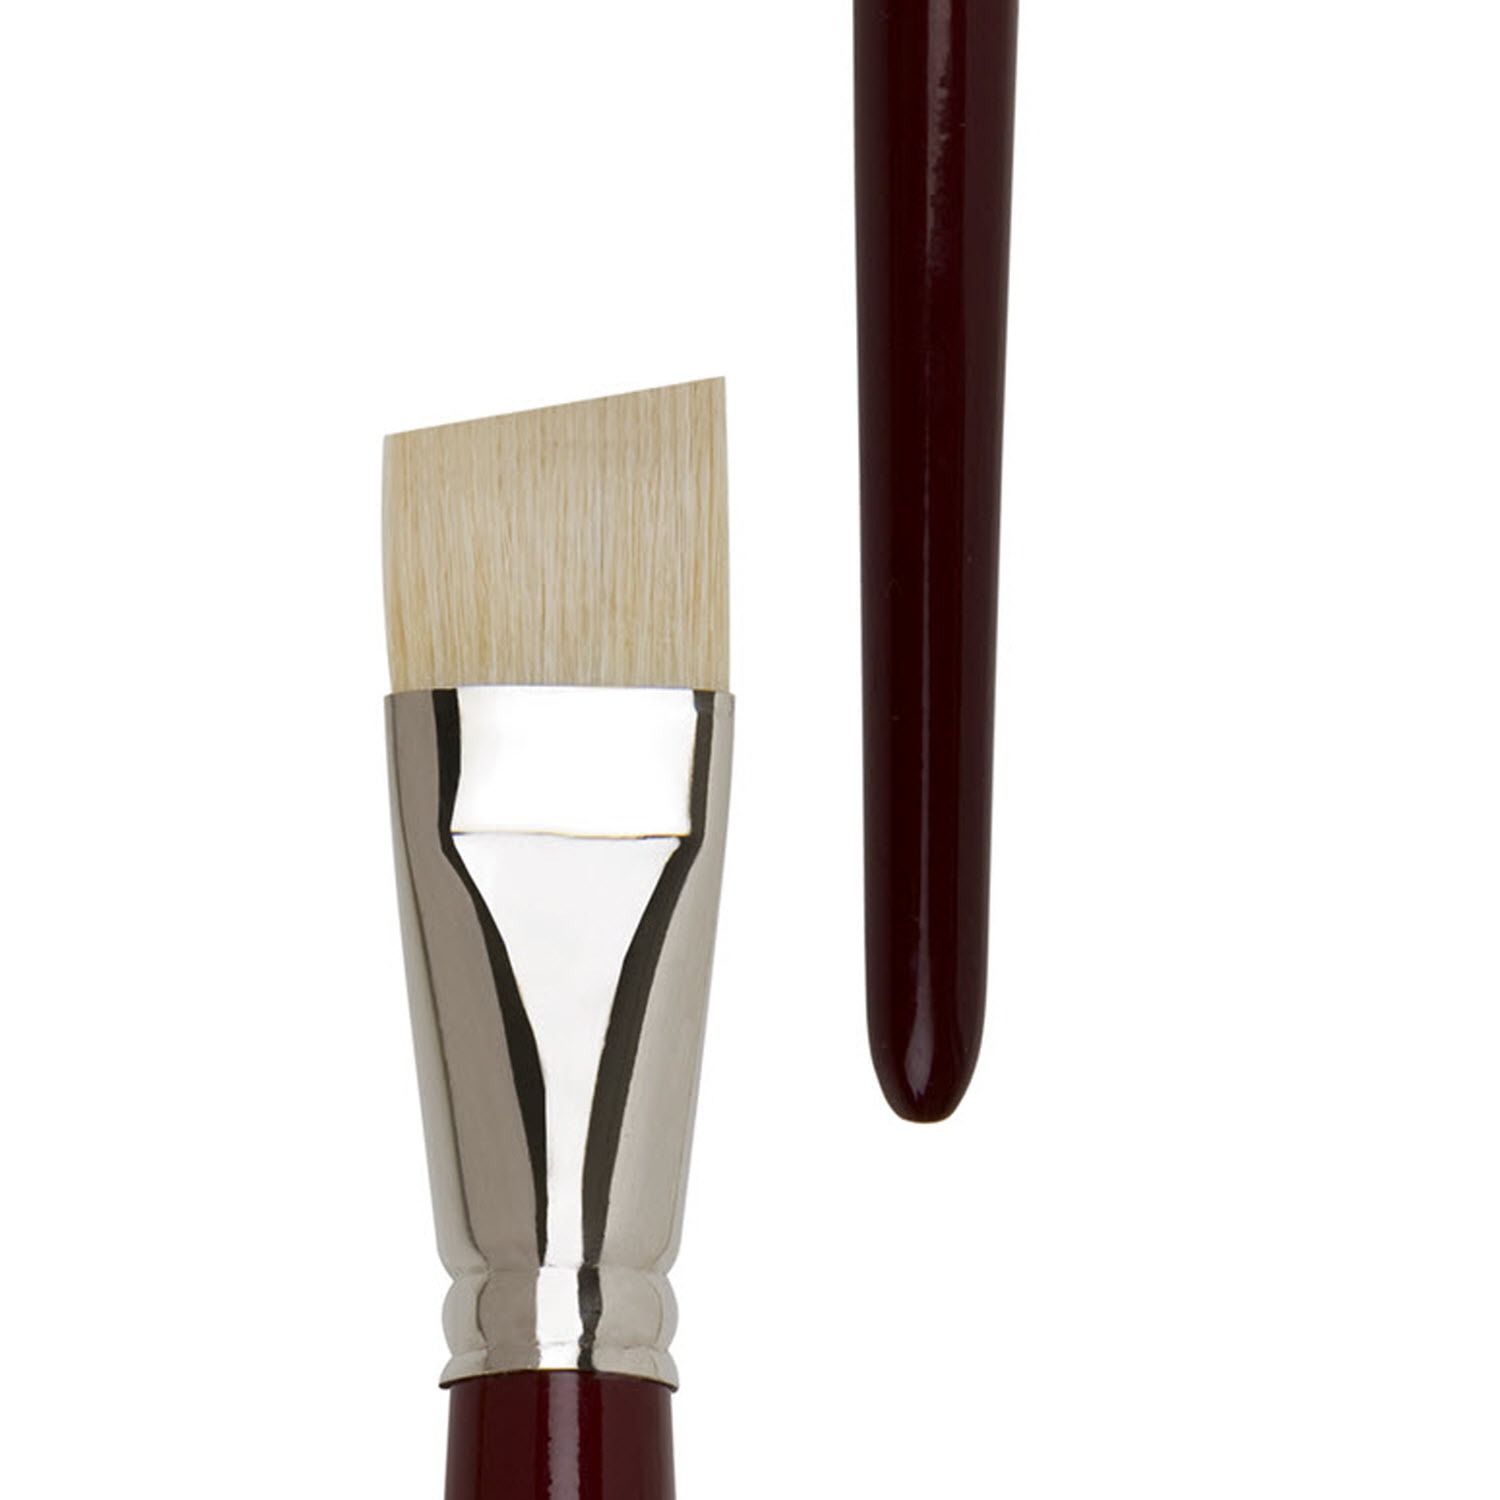 Oil & Acrylic, Fan Brush - Bristle - lineo1911 - Shop